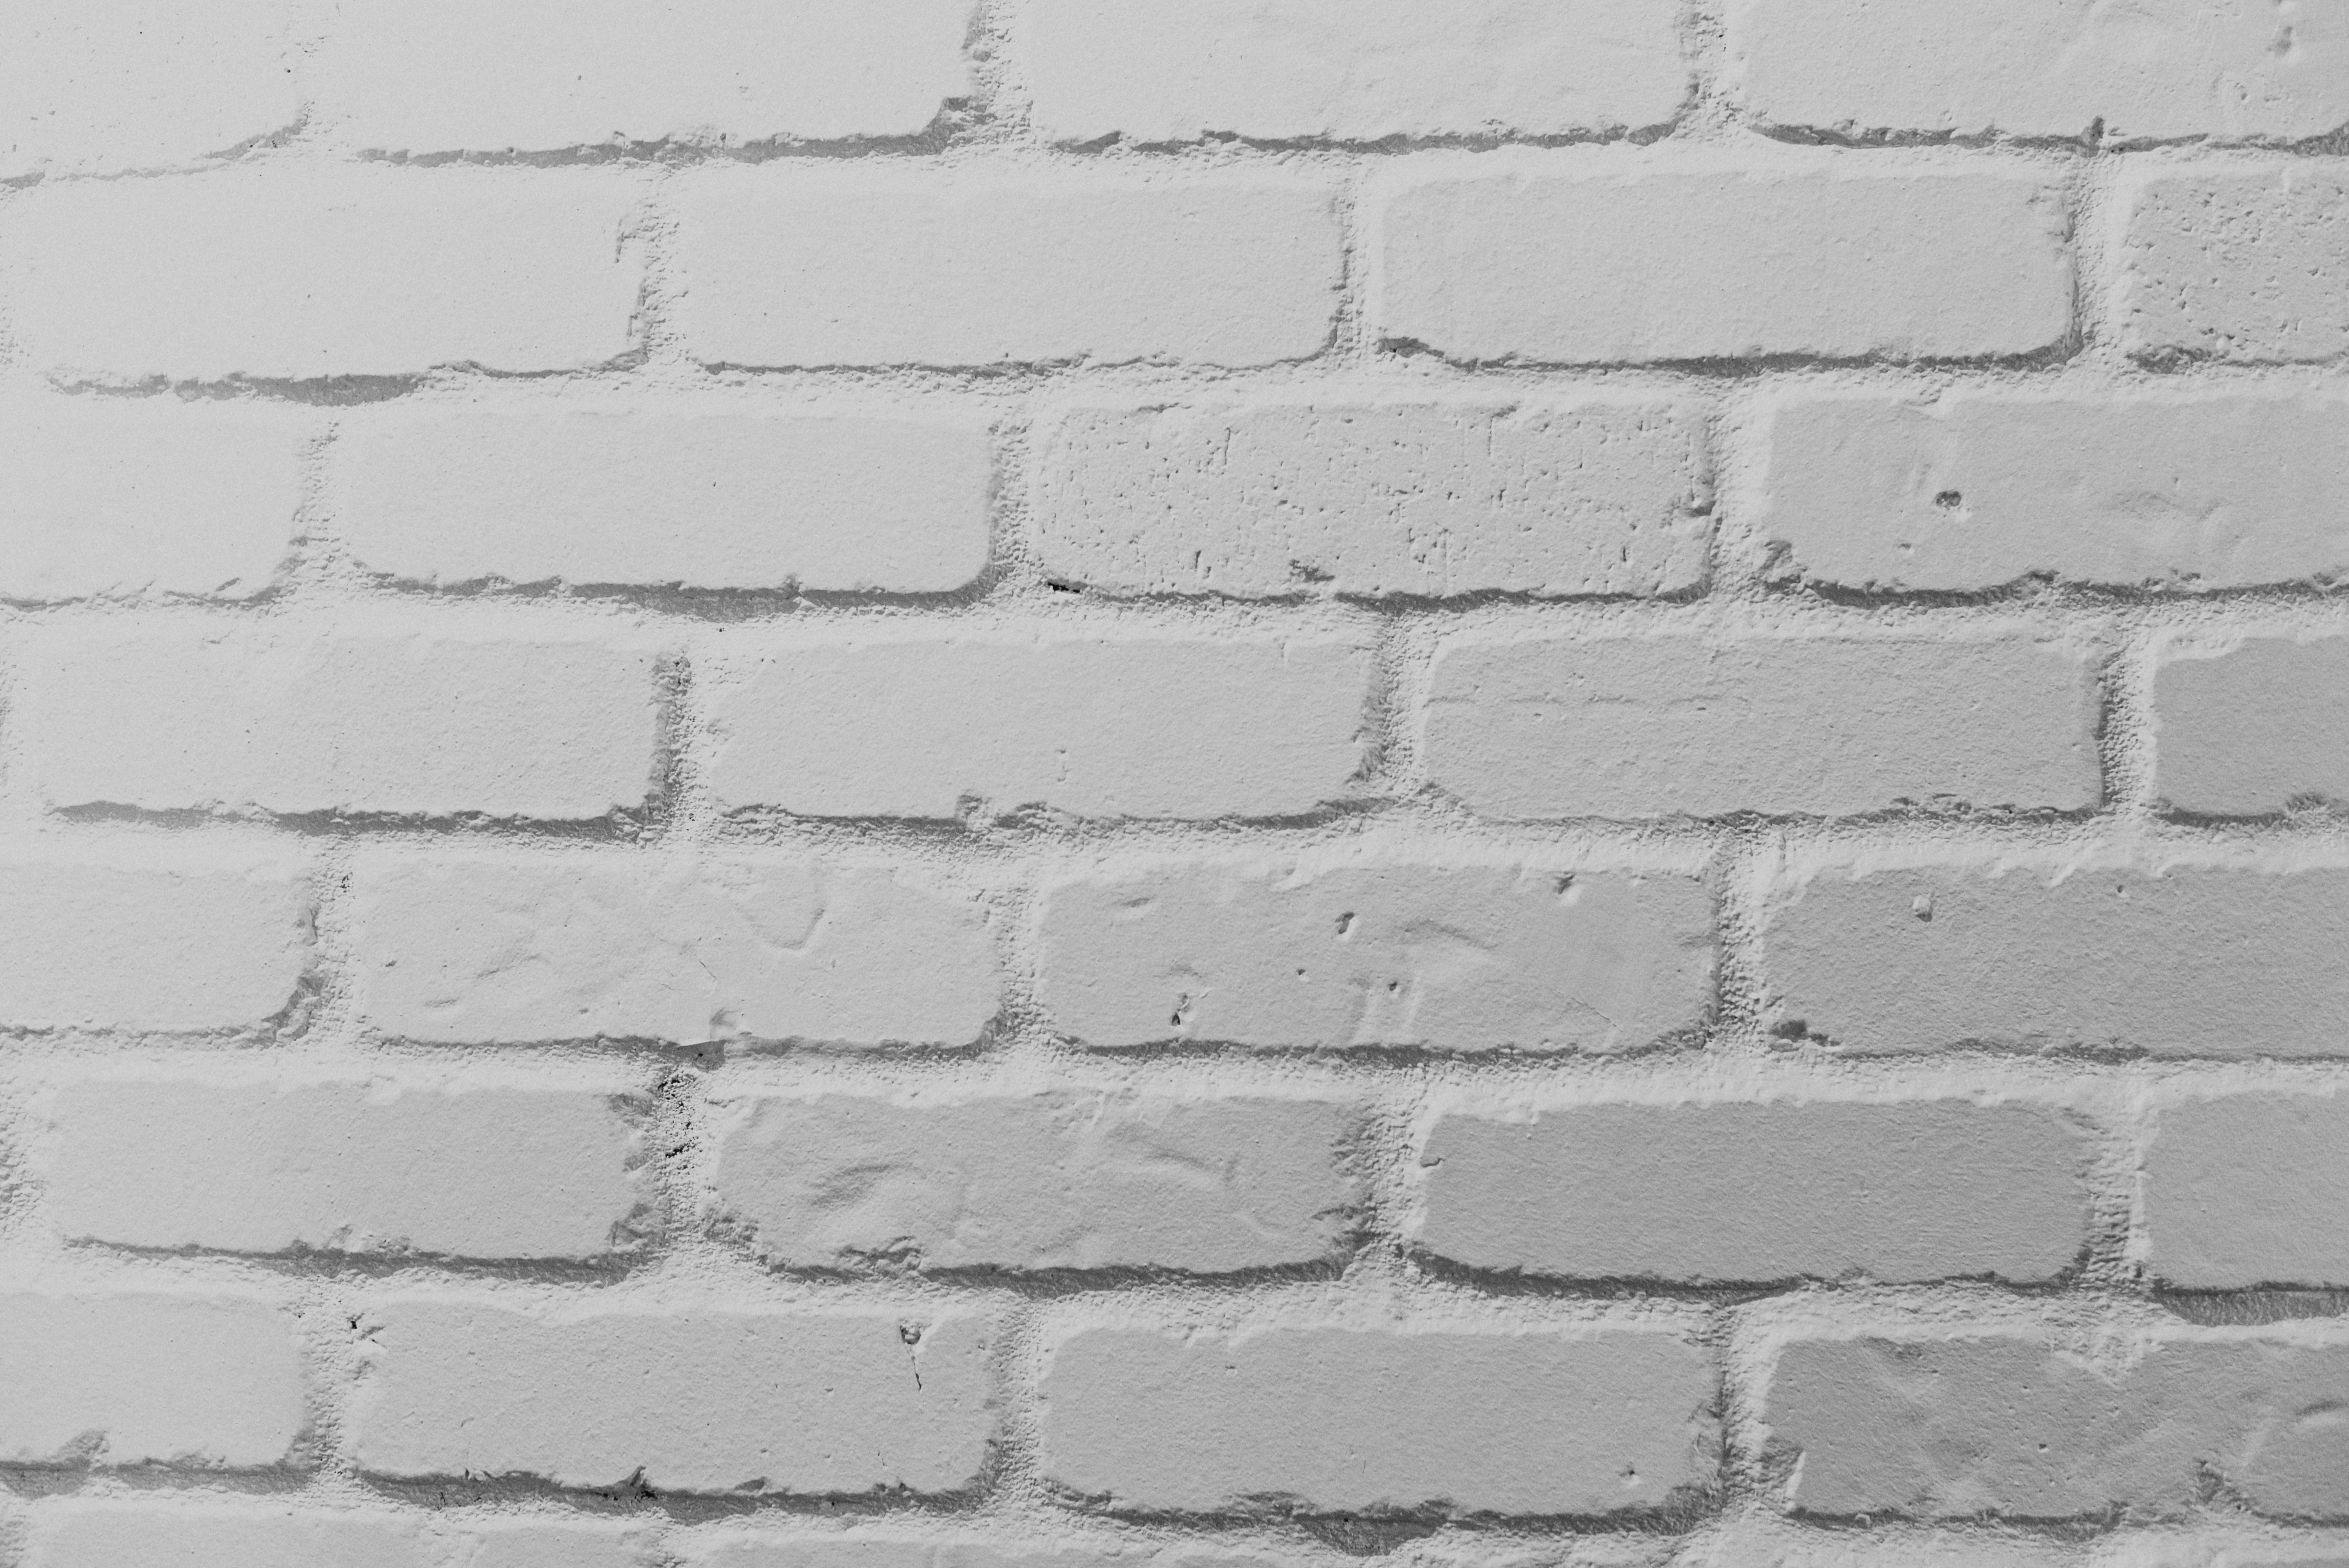 bricks texture black and white